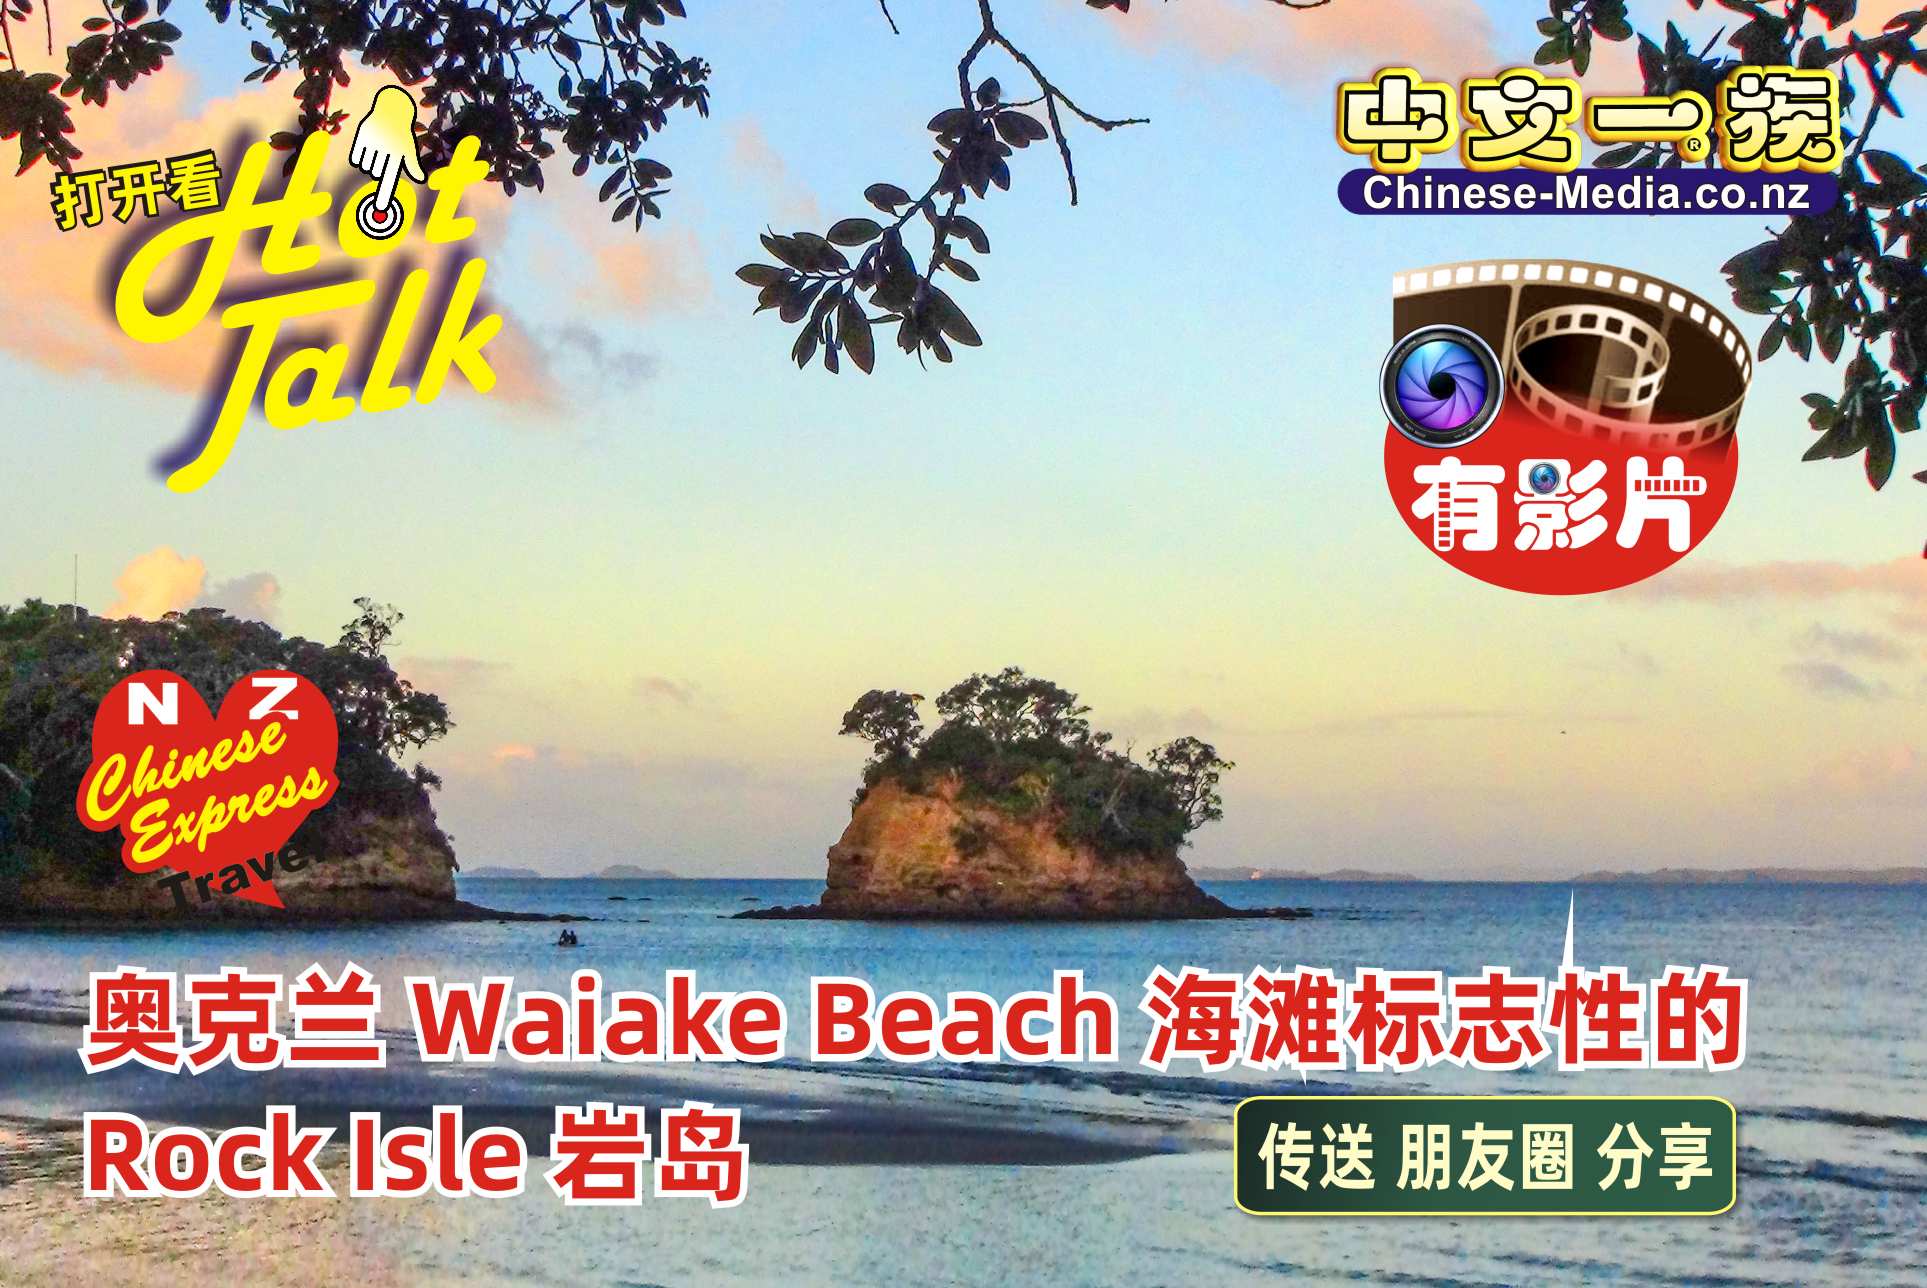 Waiake Beach Rock Isle 岩島 懷阿克 海灘  中文一族傳媒新西蘭旅遊景點